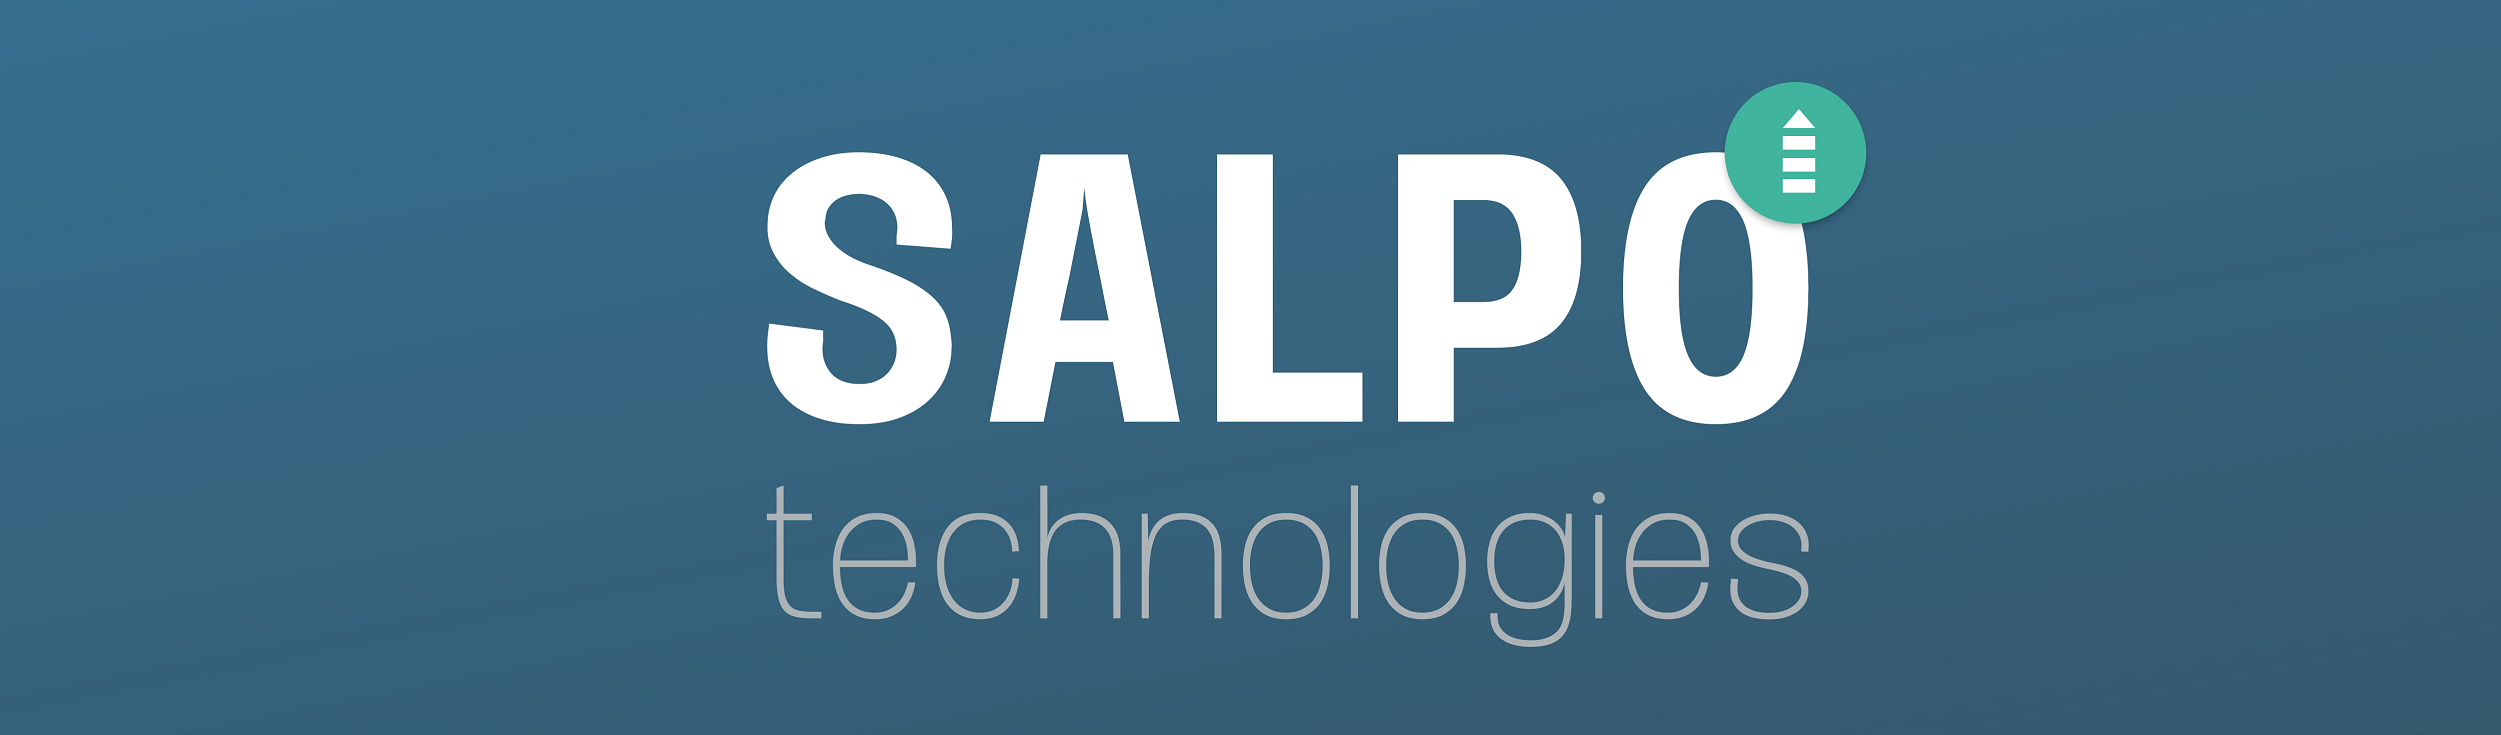 Salpo Technologies